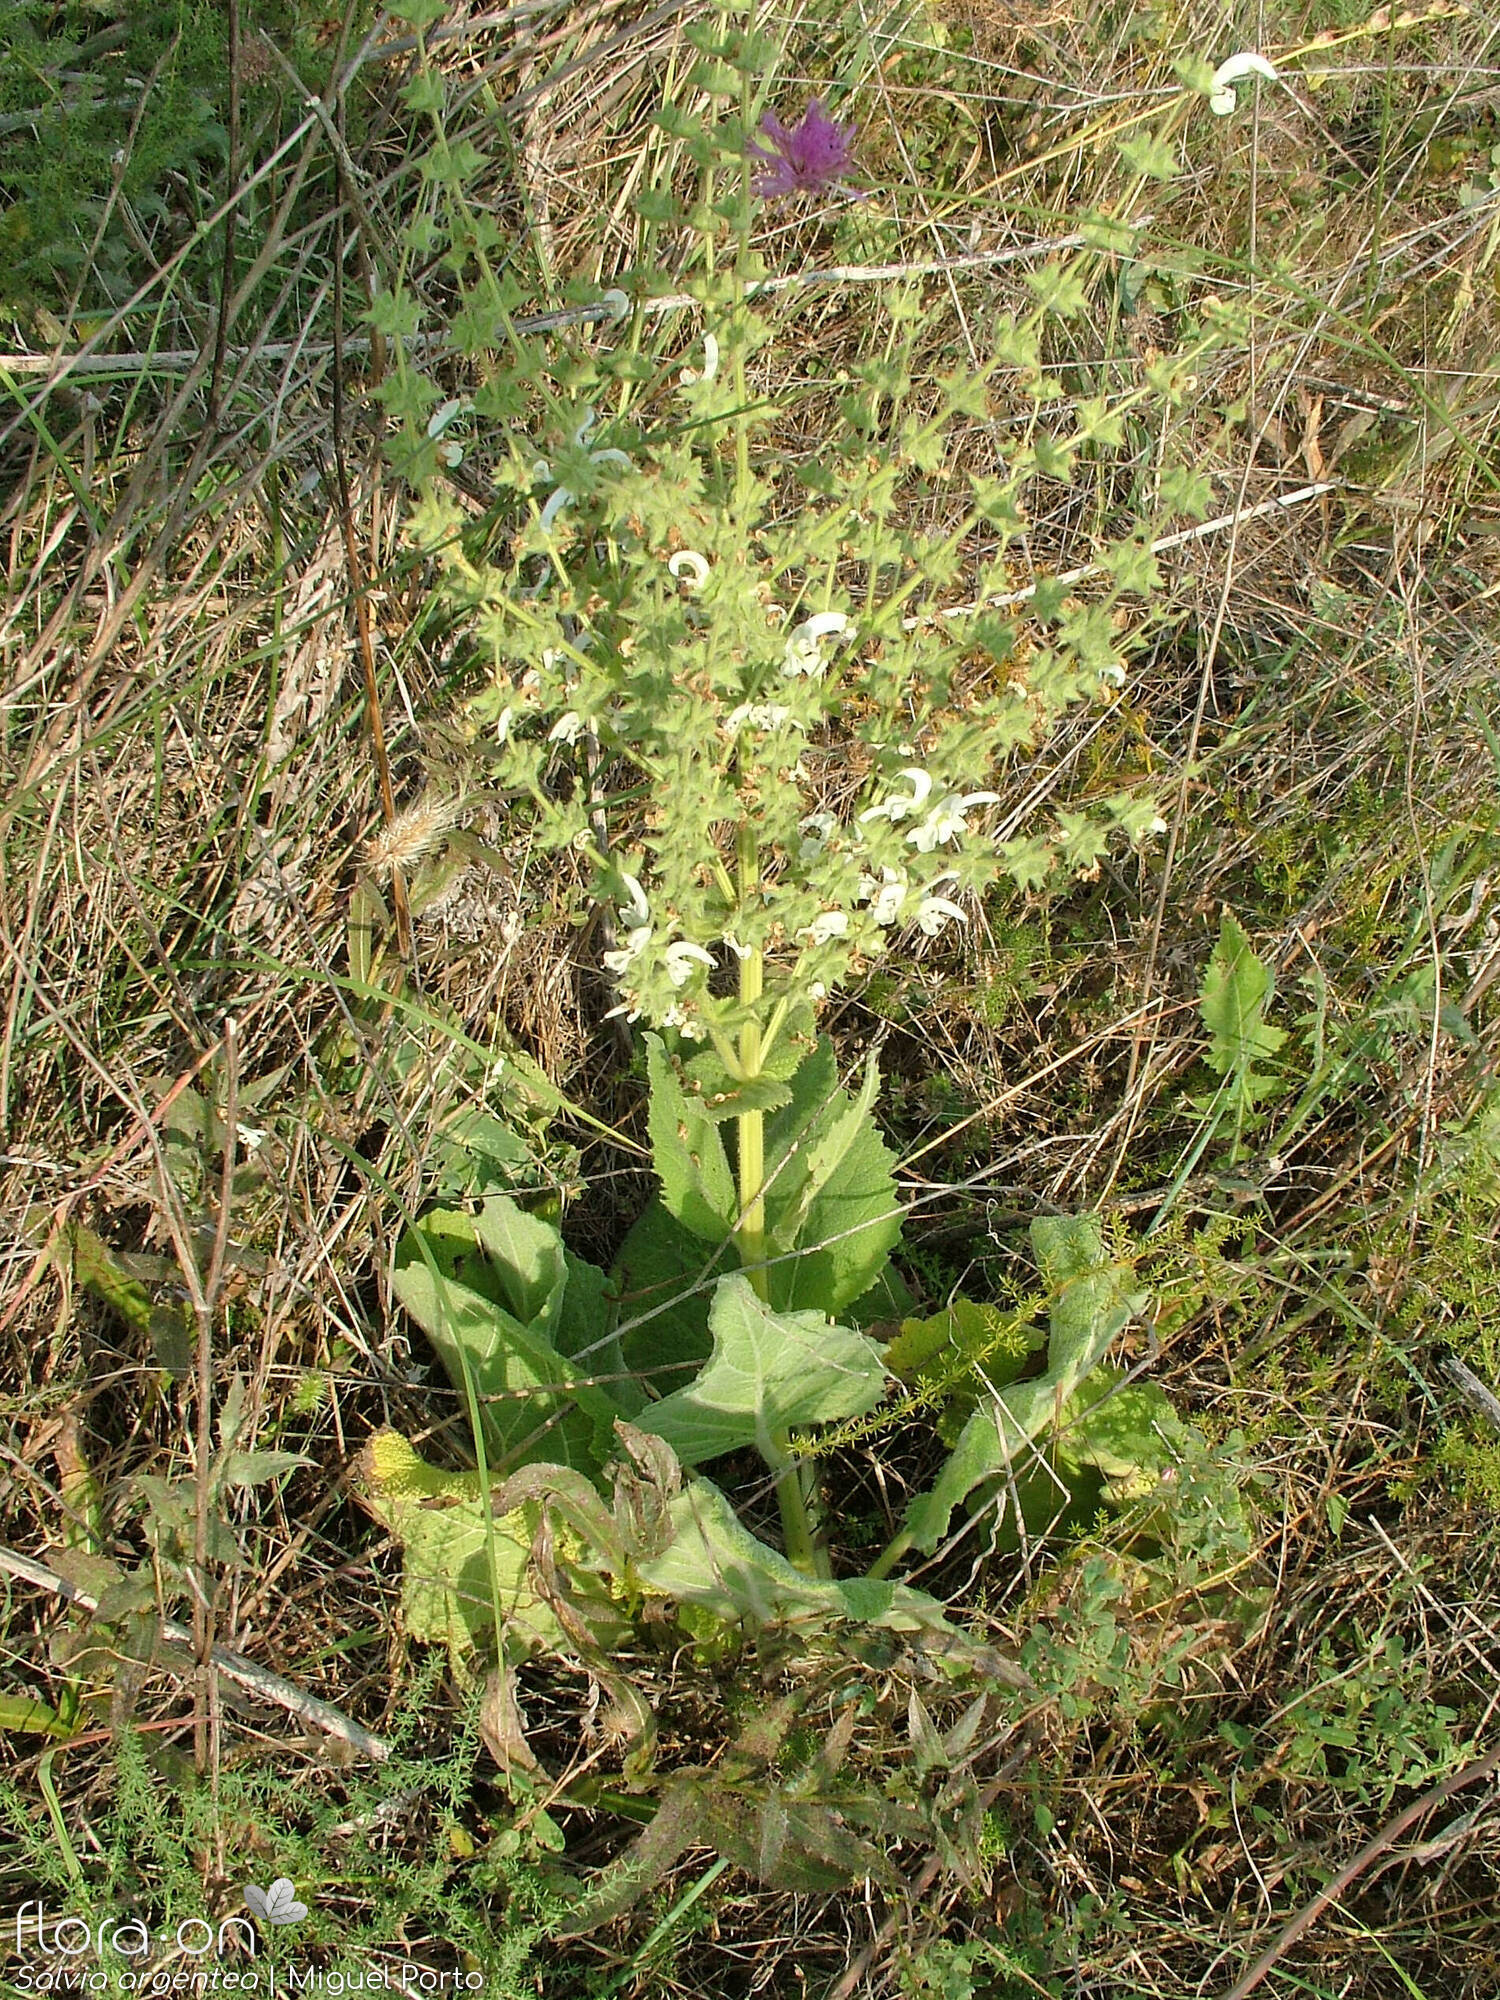 Salvia argentea - Hábito | Miguel Porto; CC BY-NC 4.0